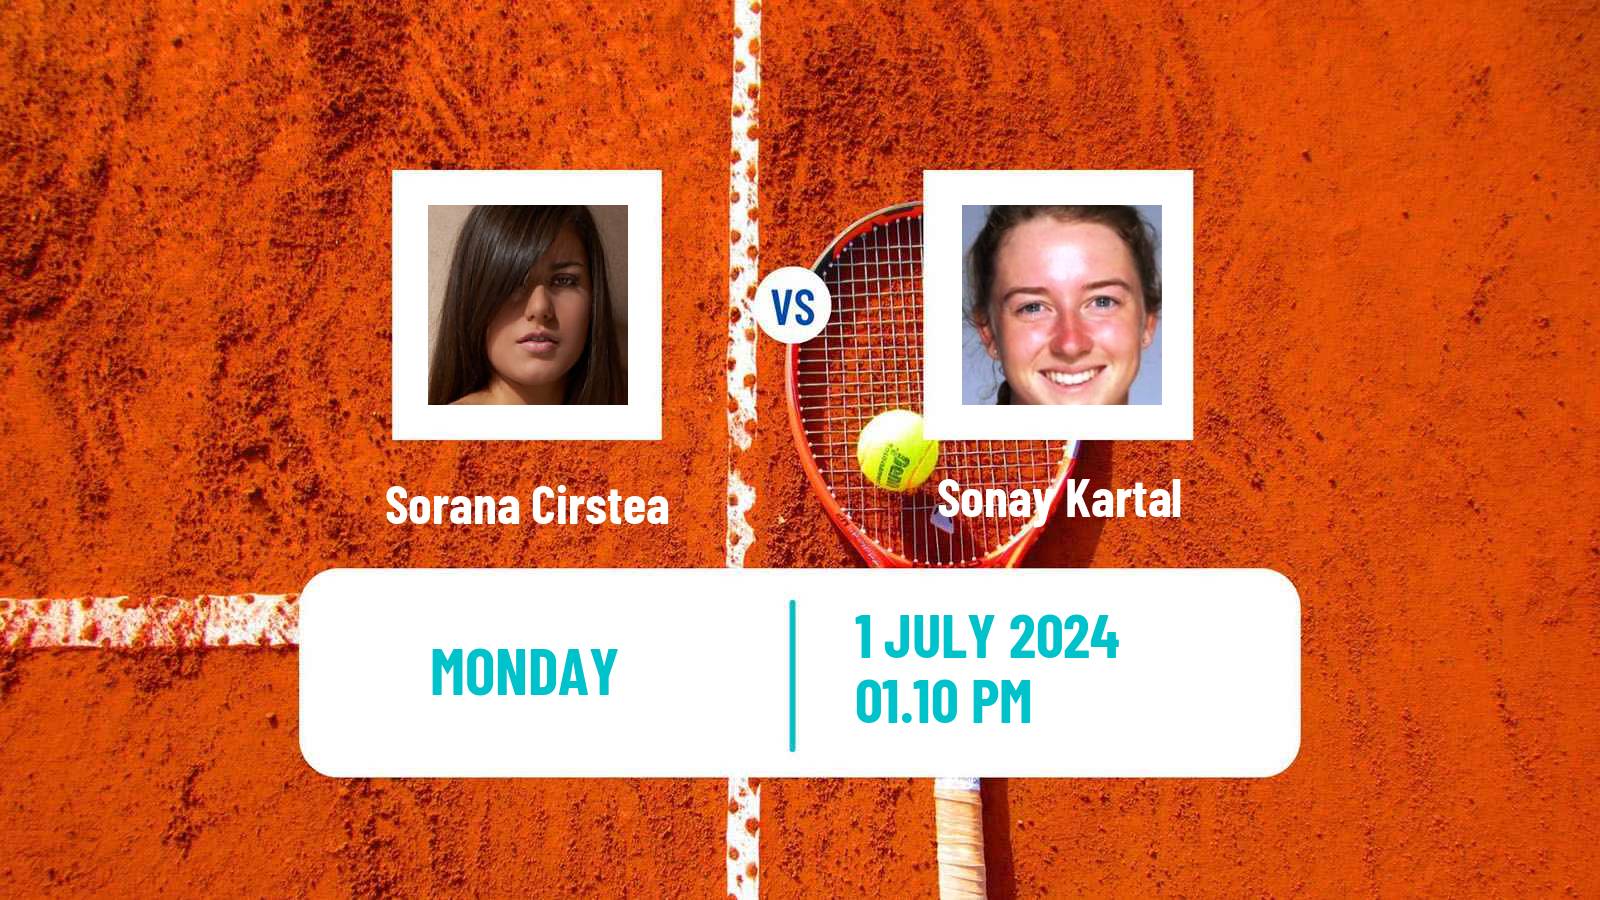 Tennis WTA Wimbledon Sorana Cirstea - Sonay Kartal